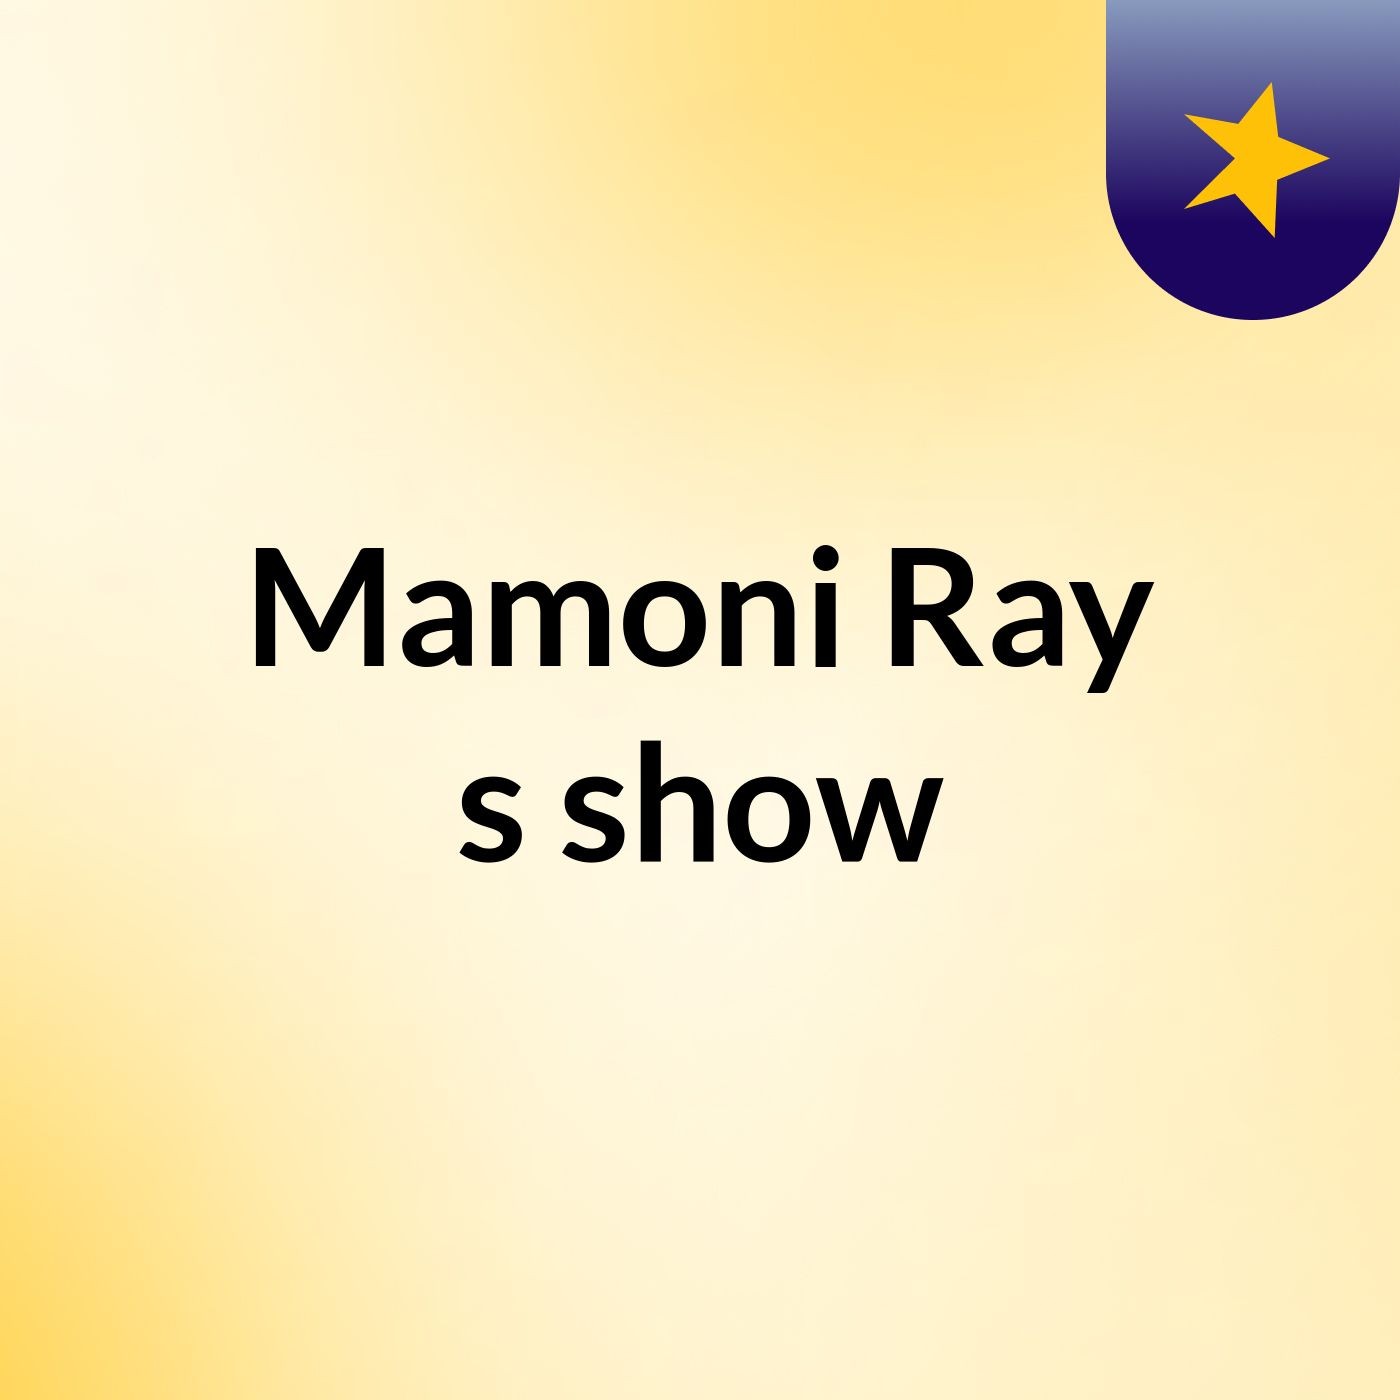 Mamoni Ray's show